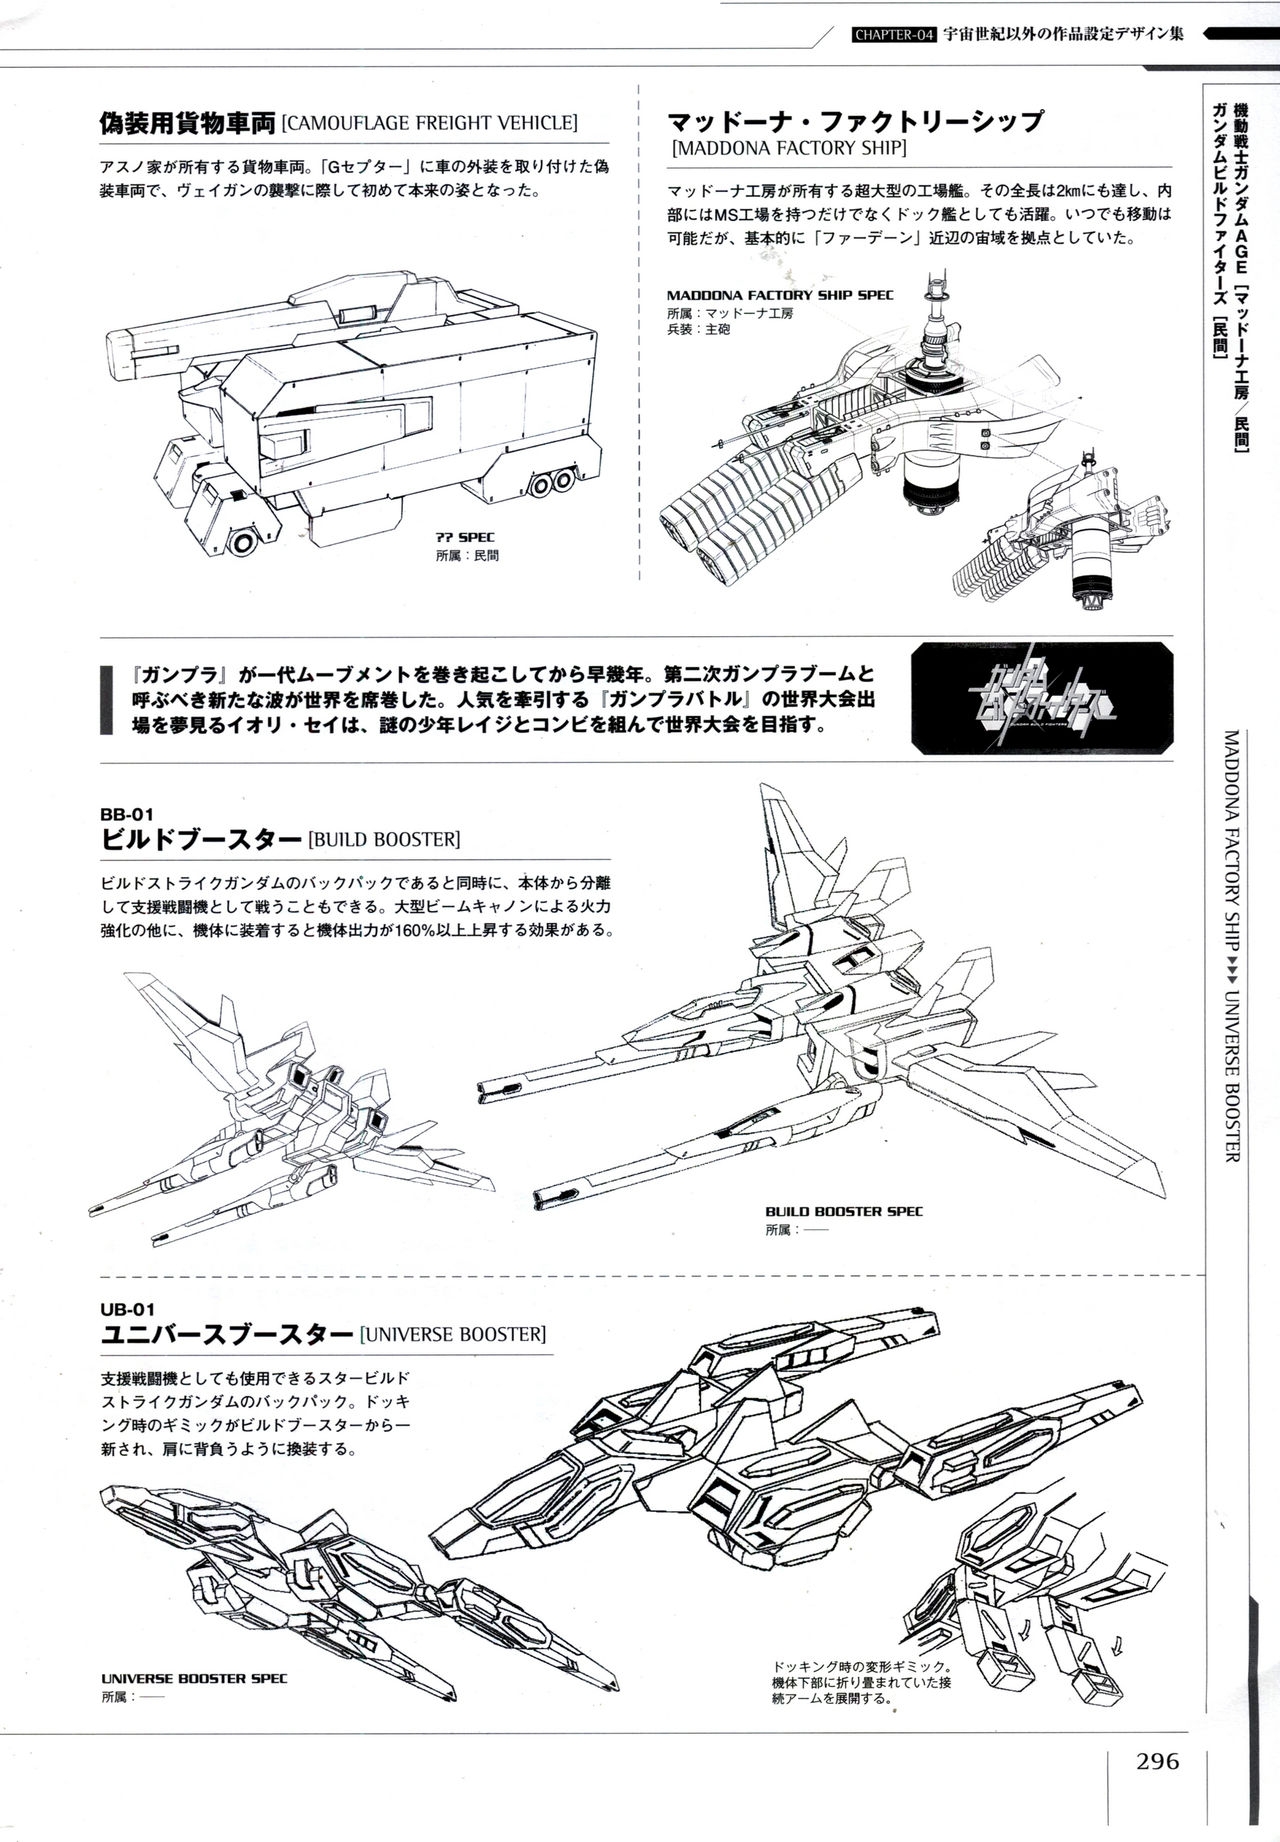 Mobile Suit Gundam - Ship & Aerospace Plane Encyclopedia - Revised Edition 301